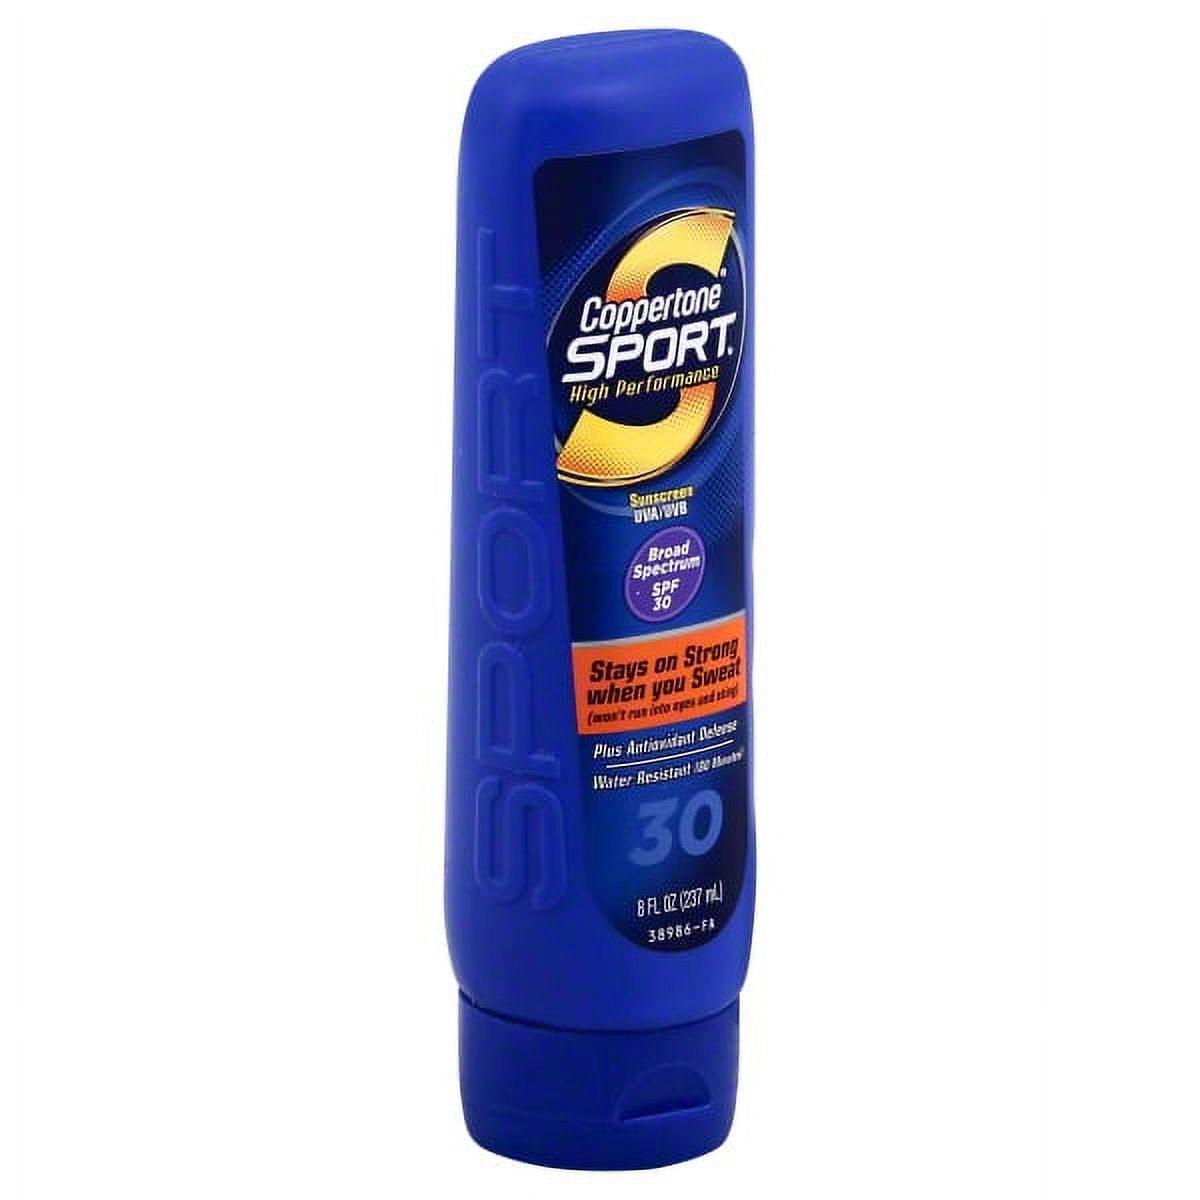 MSD Consumer Care Coppertone  Sport Sunscreen, 8 oz - image 1 of 2